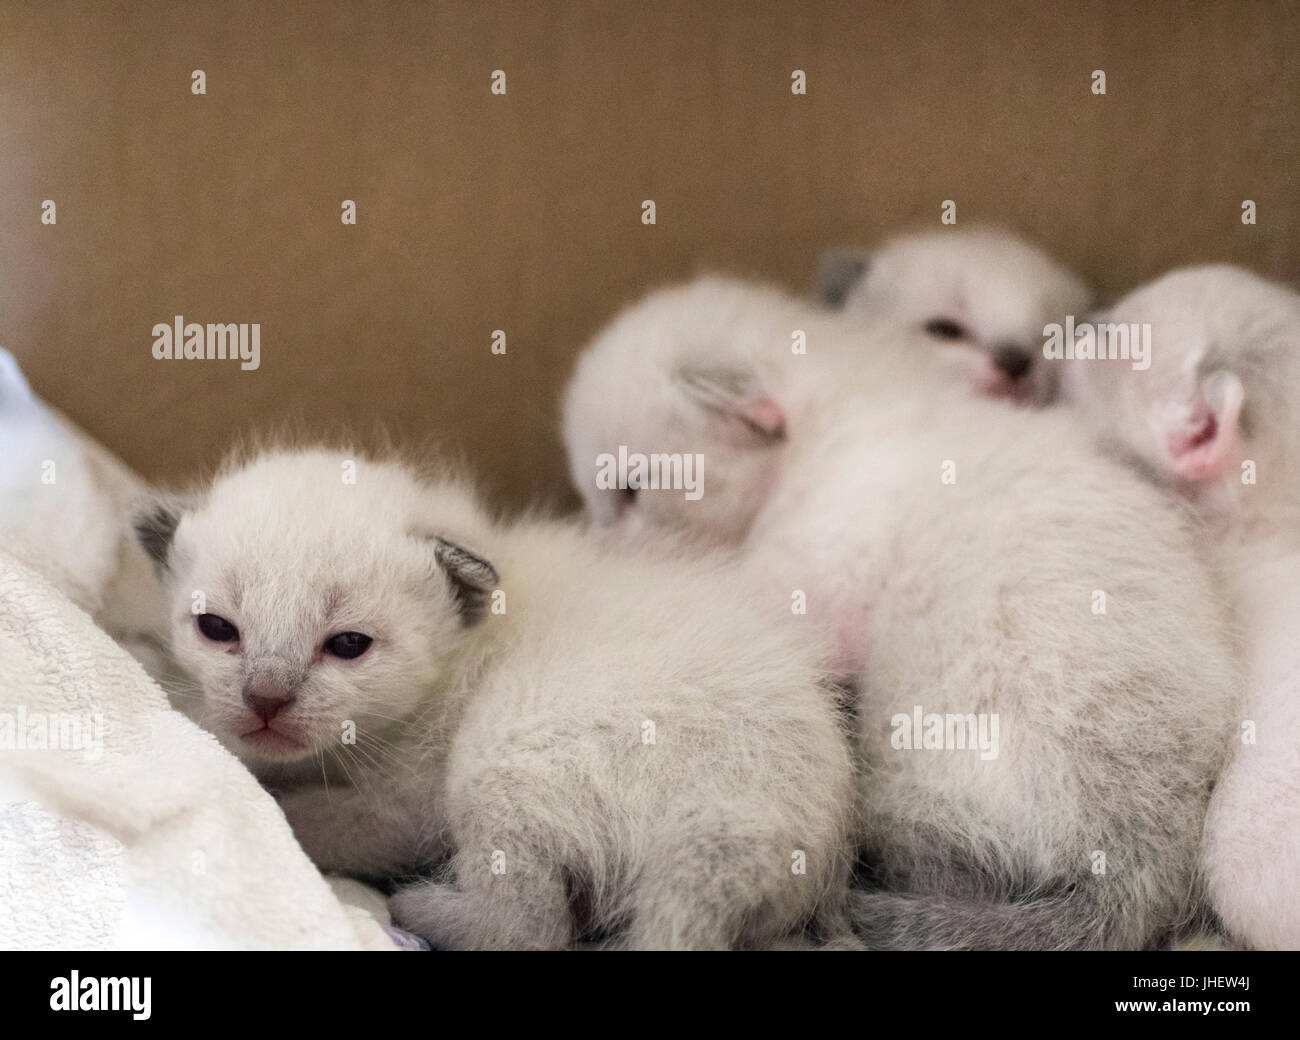 Four newborn baby cats snuggled in a cardboard box Stock Photo